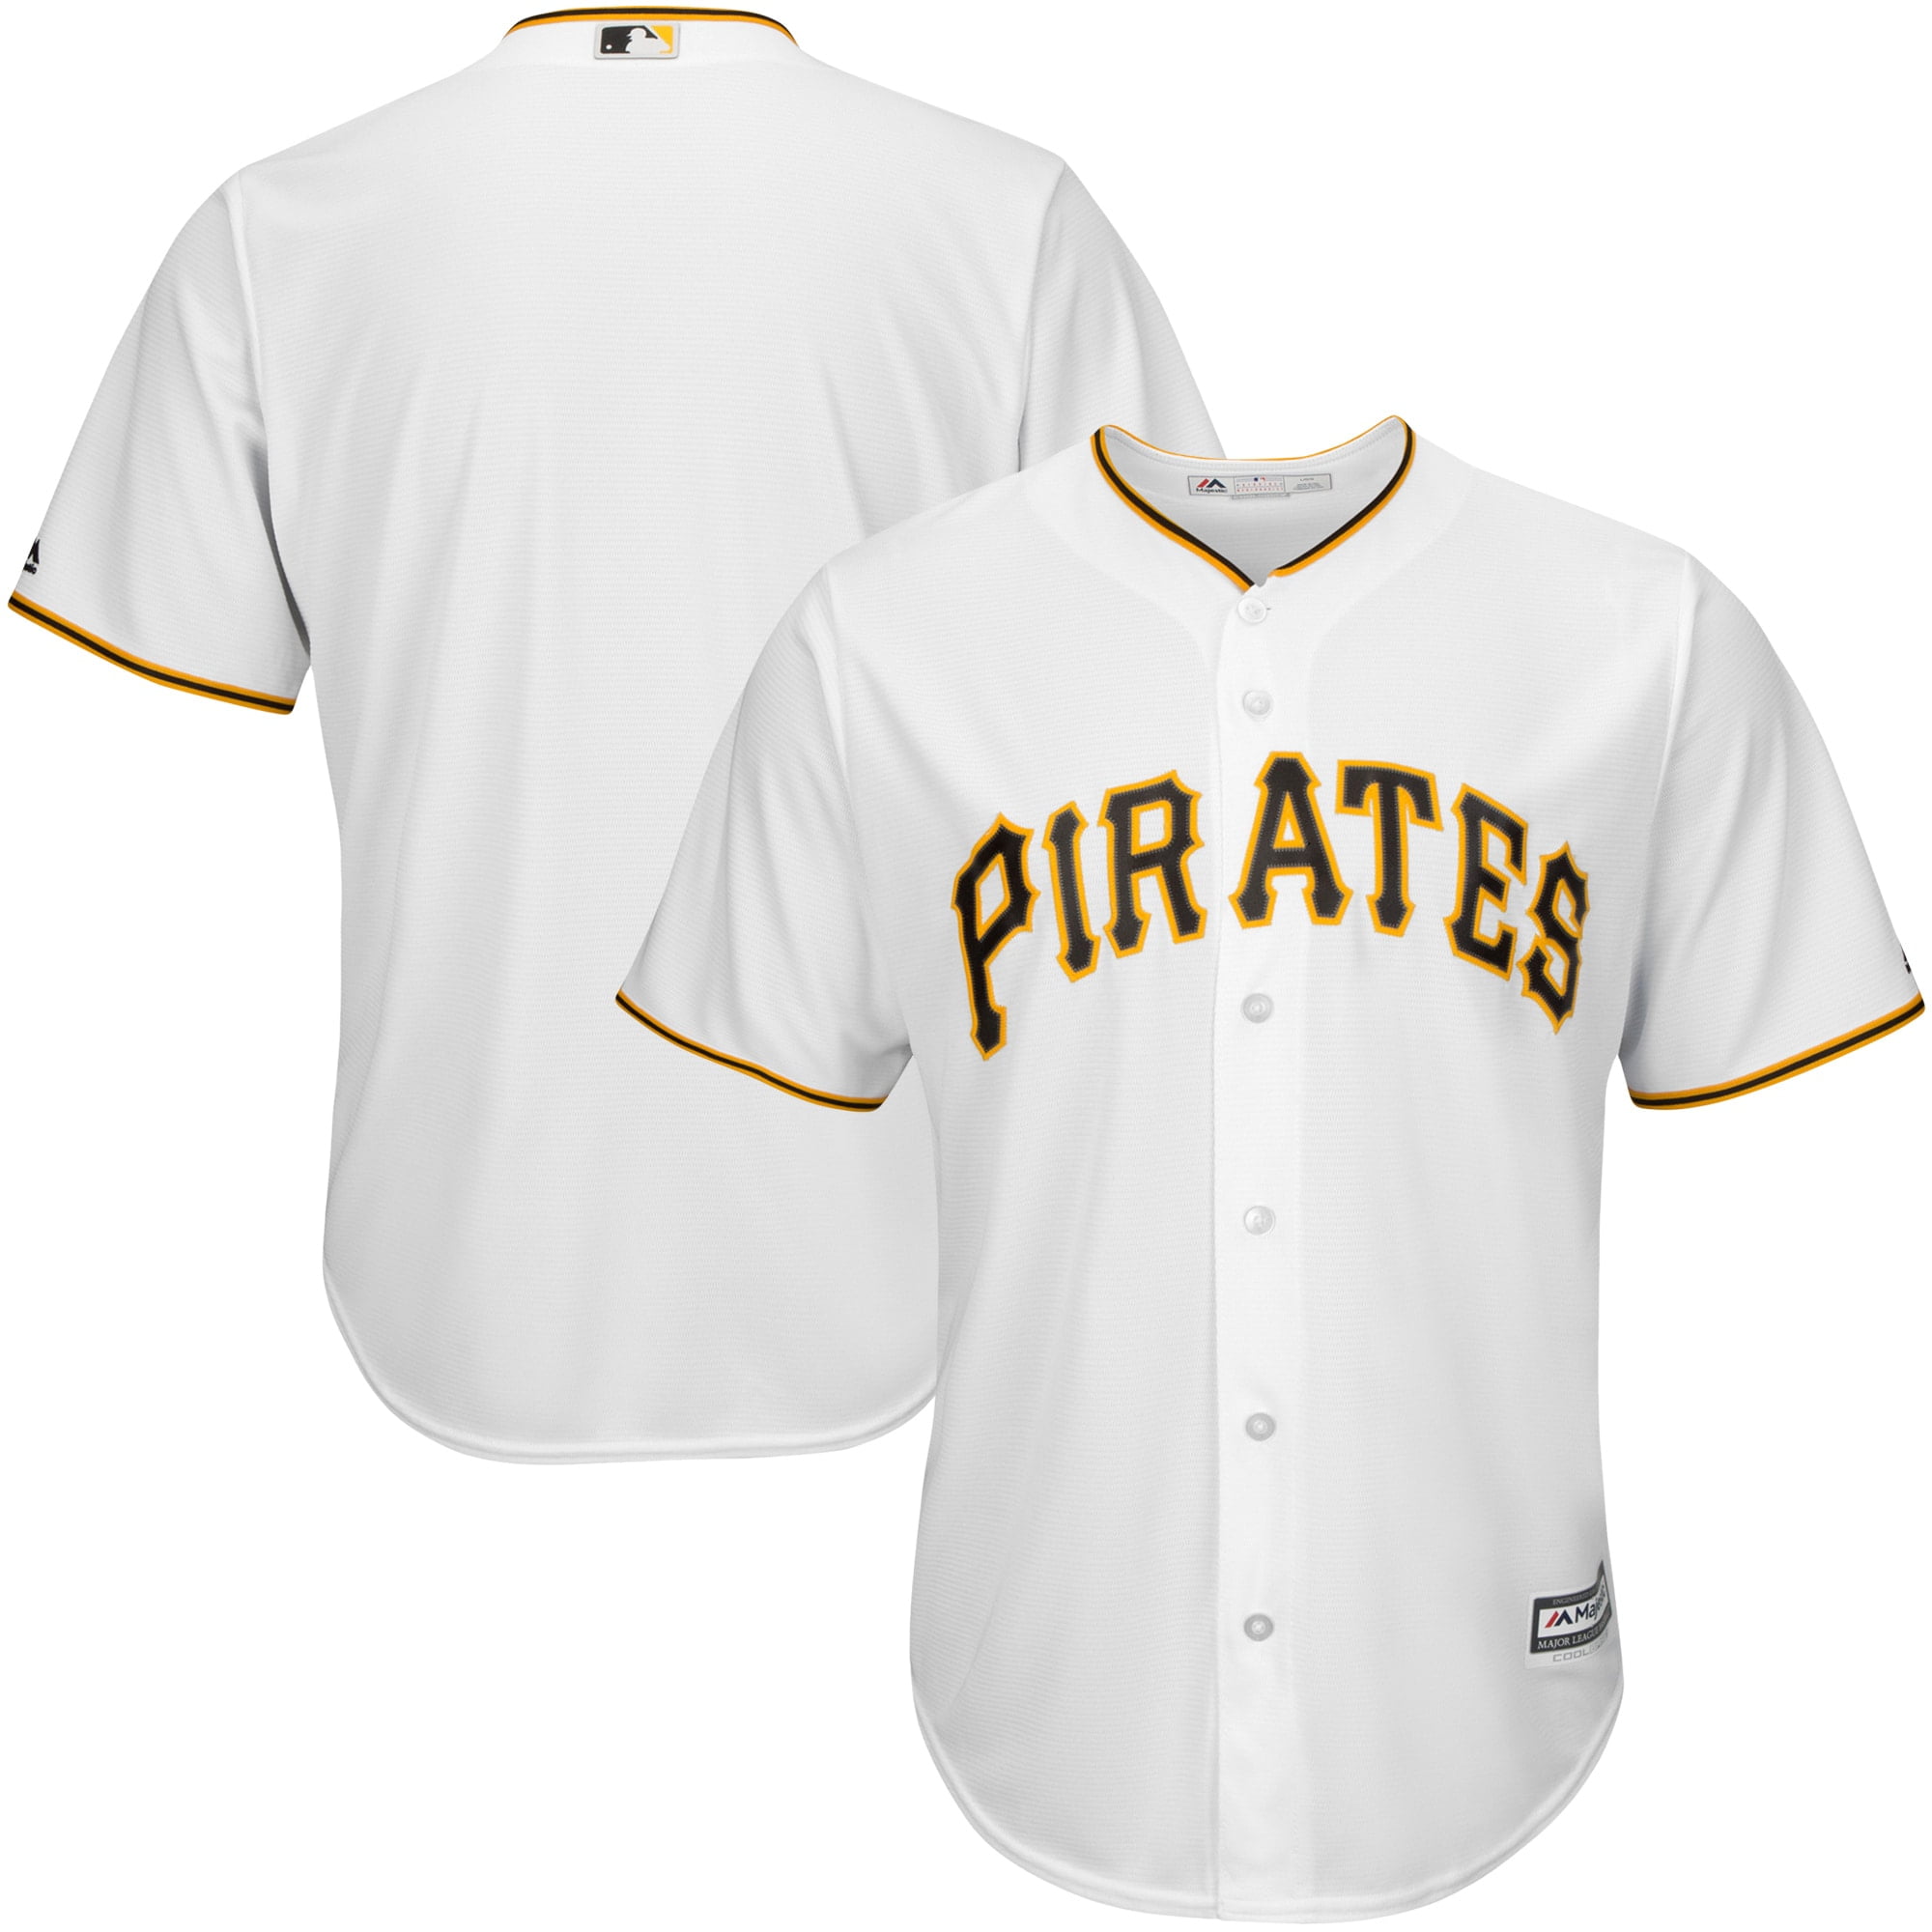 pirates jersey price